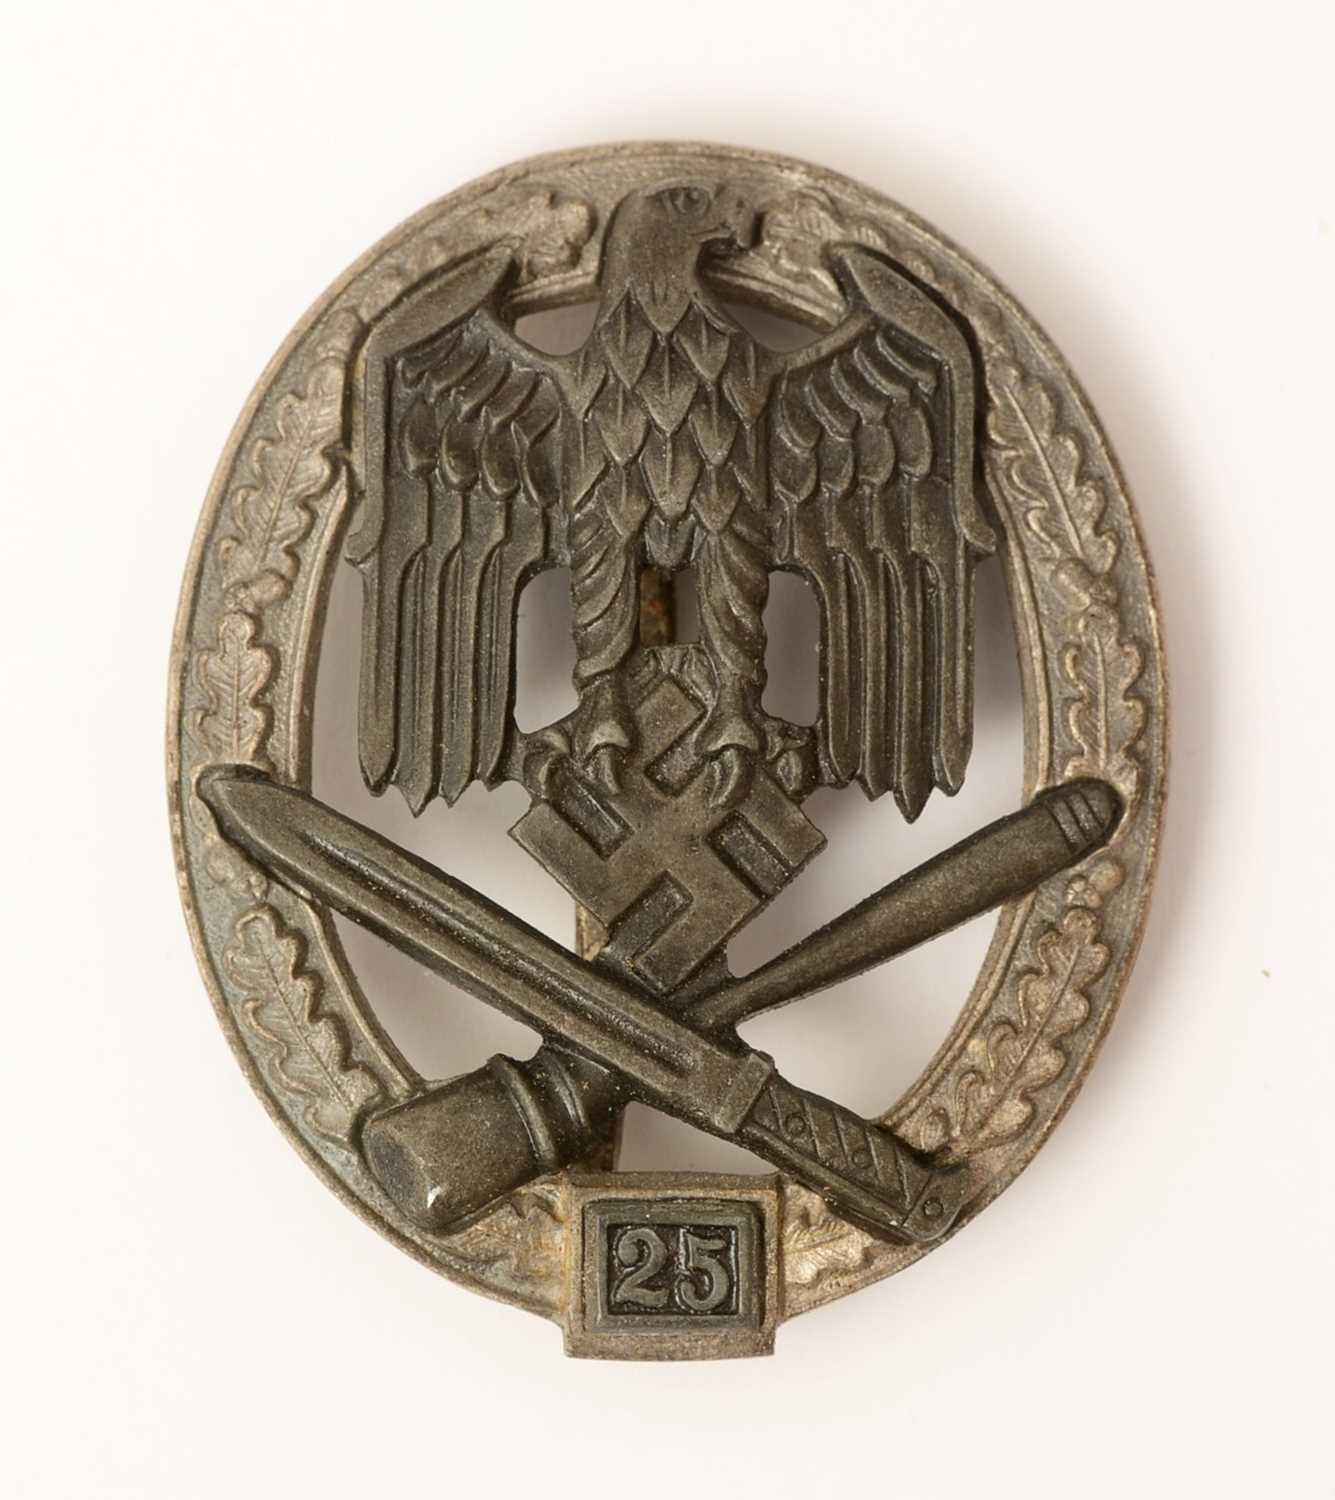 Lot 1103 - WWII Waffen-SS General Assault combat badge, 25 engagements